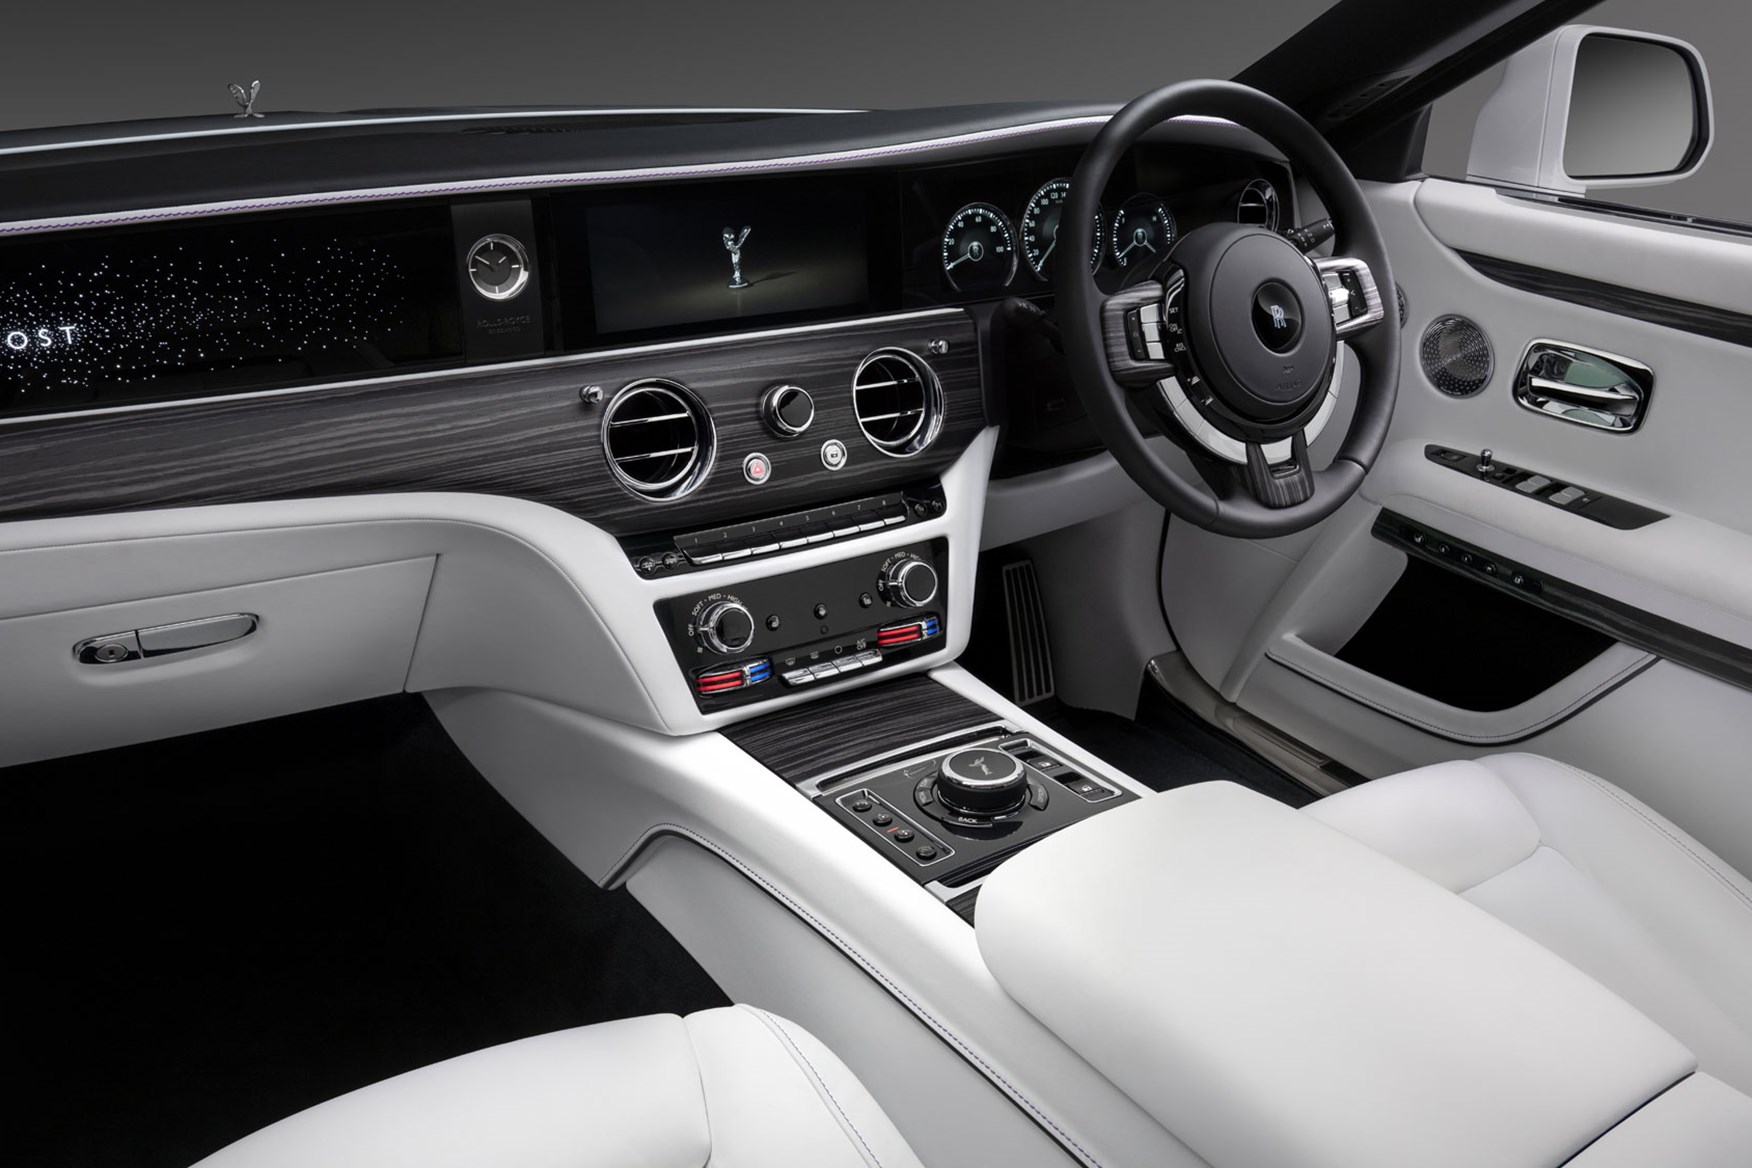 2021 Rolls Royce Ghost interior Prestigious luxury sedan car walkaround  review rolls royce ghost  YouTube